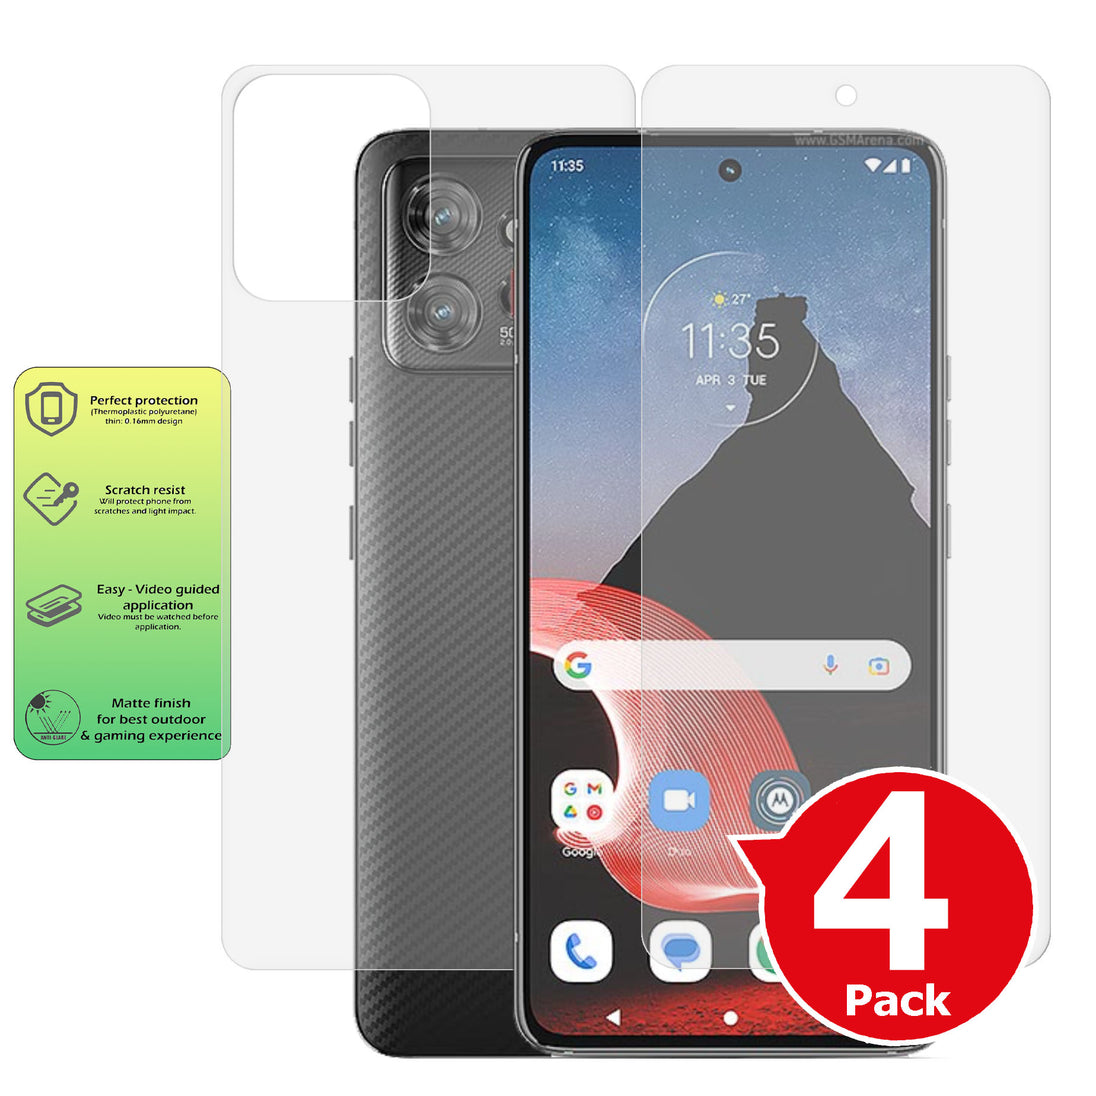 Motorola ThinkPhone screen protector matte anti glare paper like cover summary image